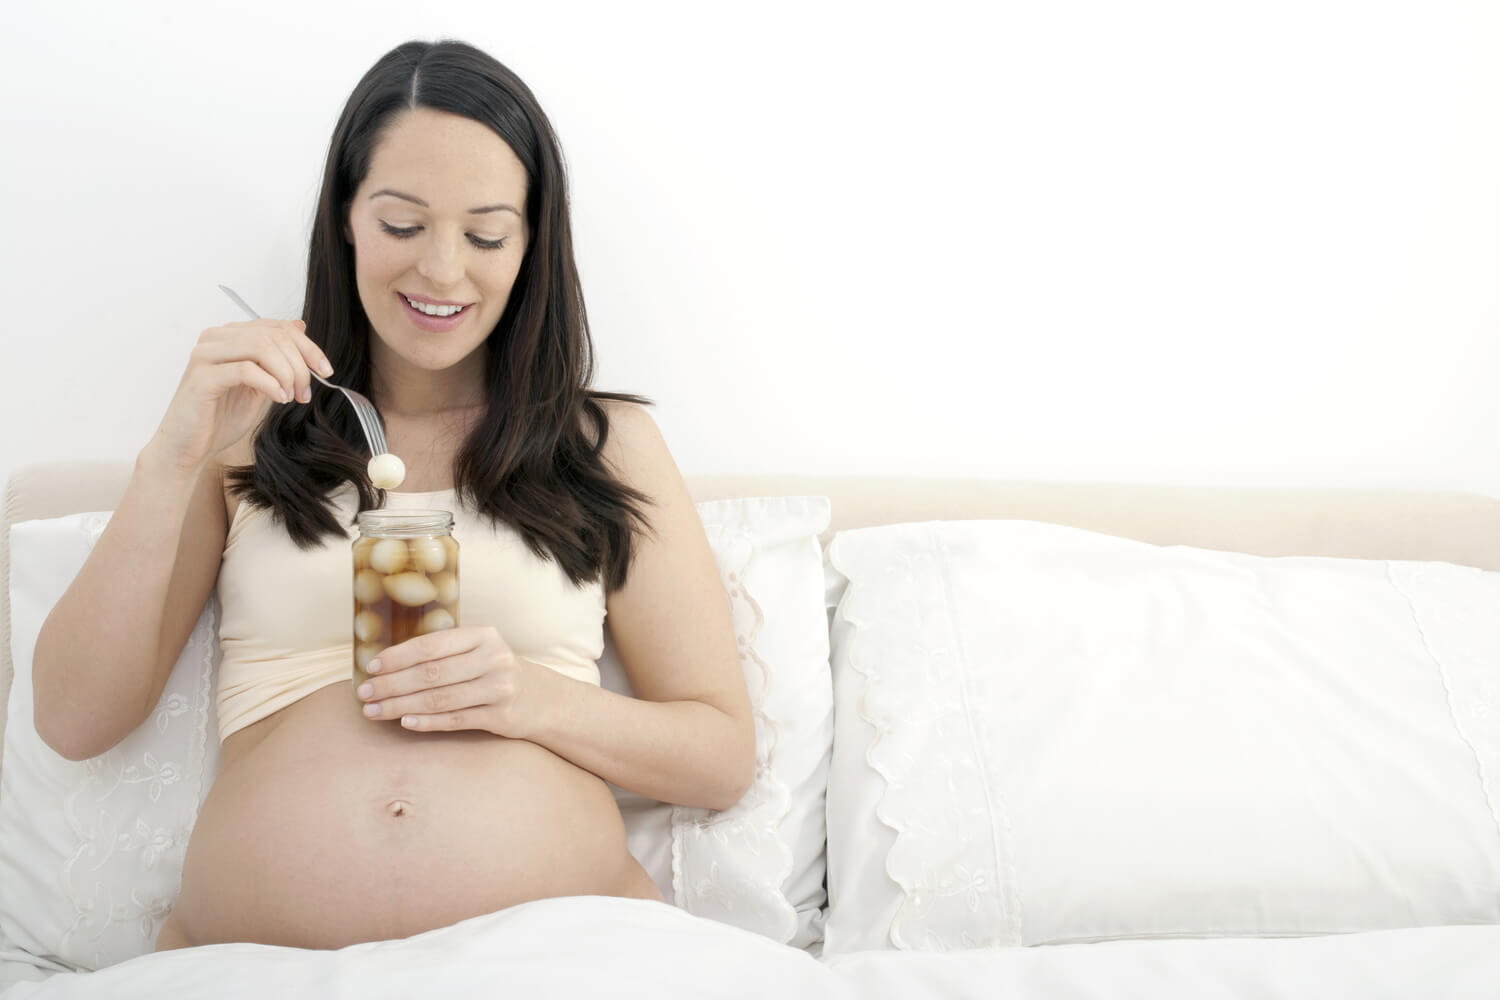  amla during pregnancy